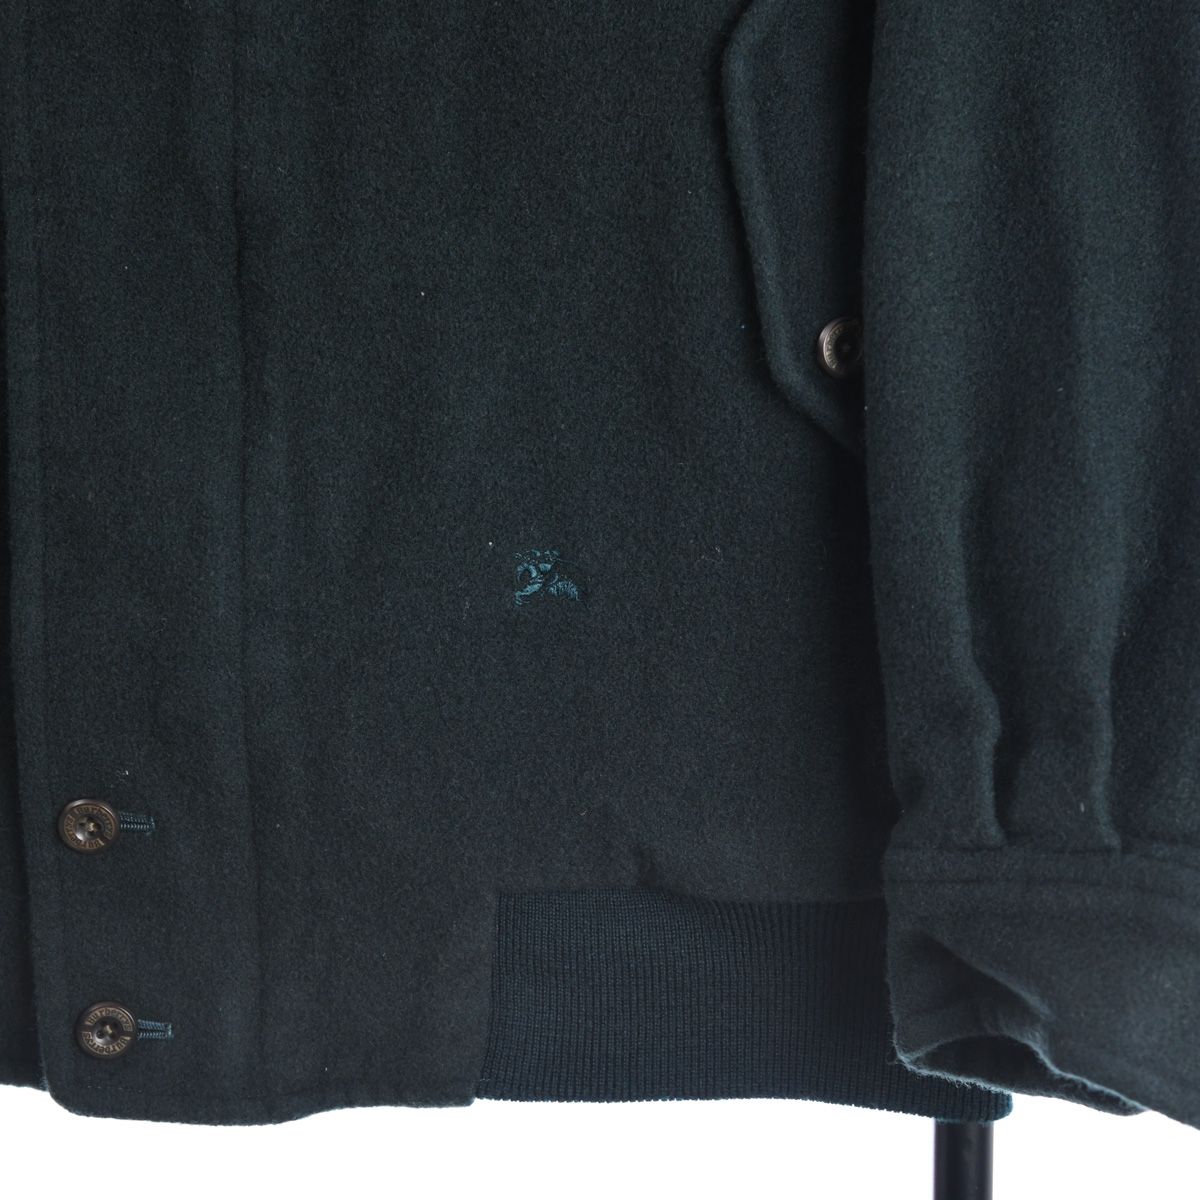 Burberry 1980s Wool Jacket